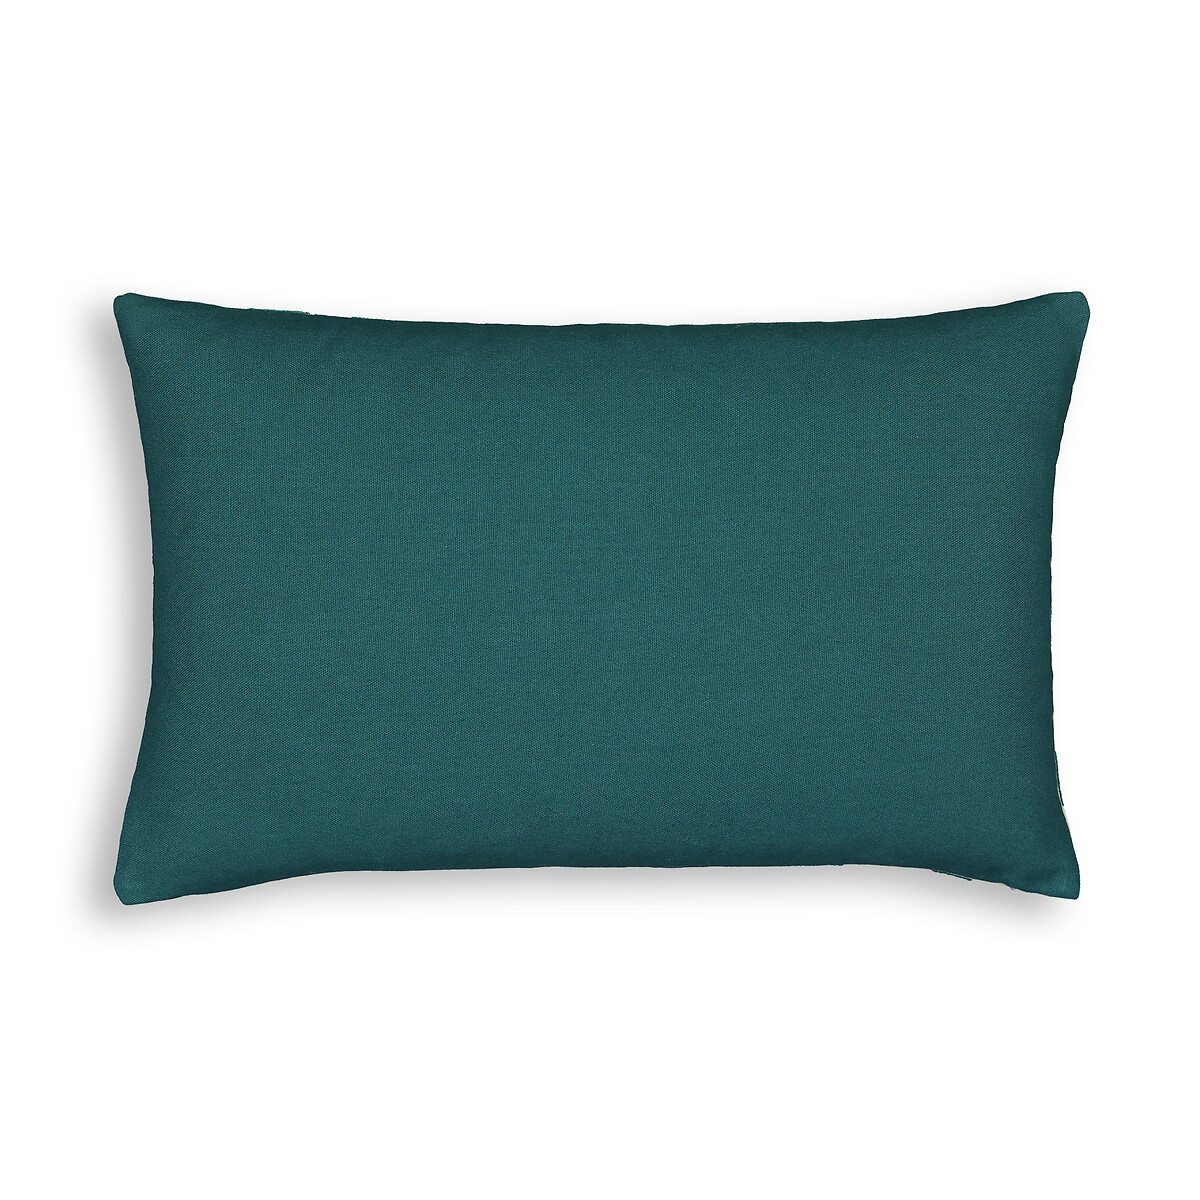 Чехол LaRedoute Для подушки с вышивкой Luxuriance 50 x 30 см зеленый, размер 50 x 30 см